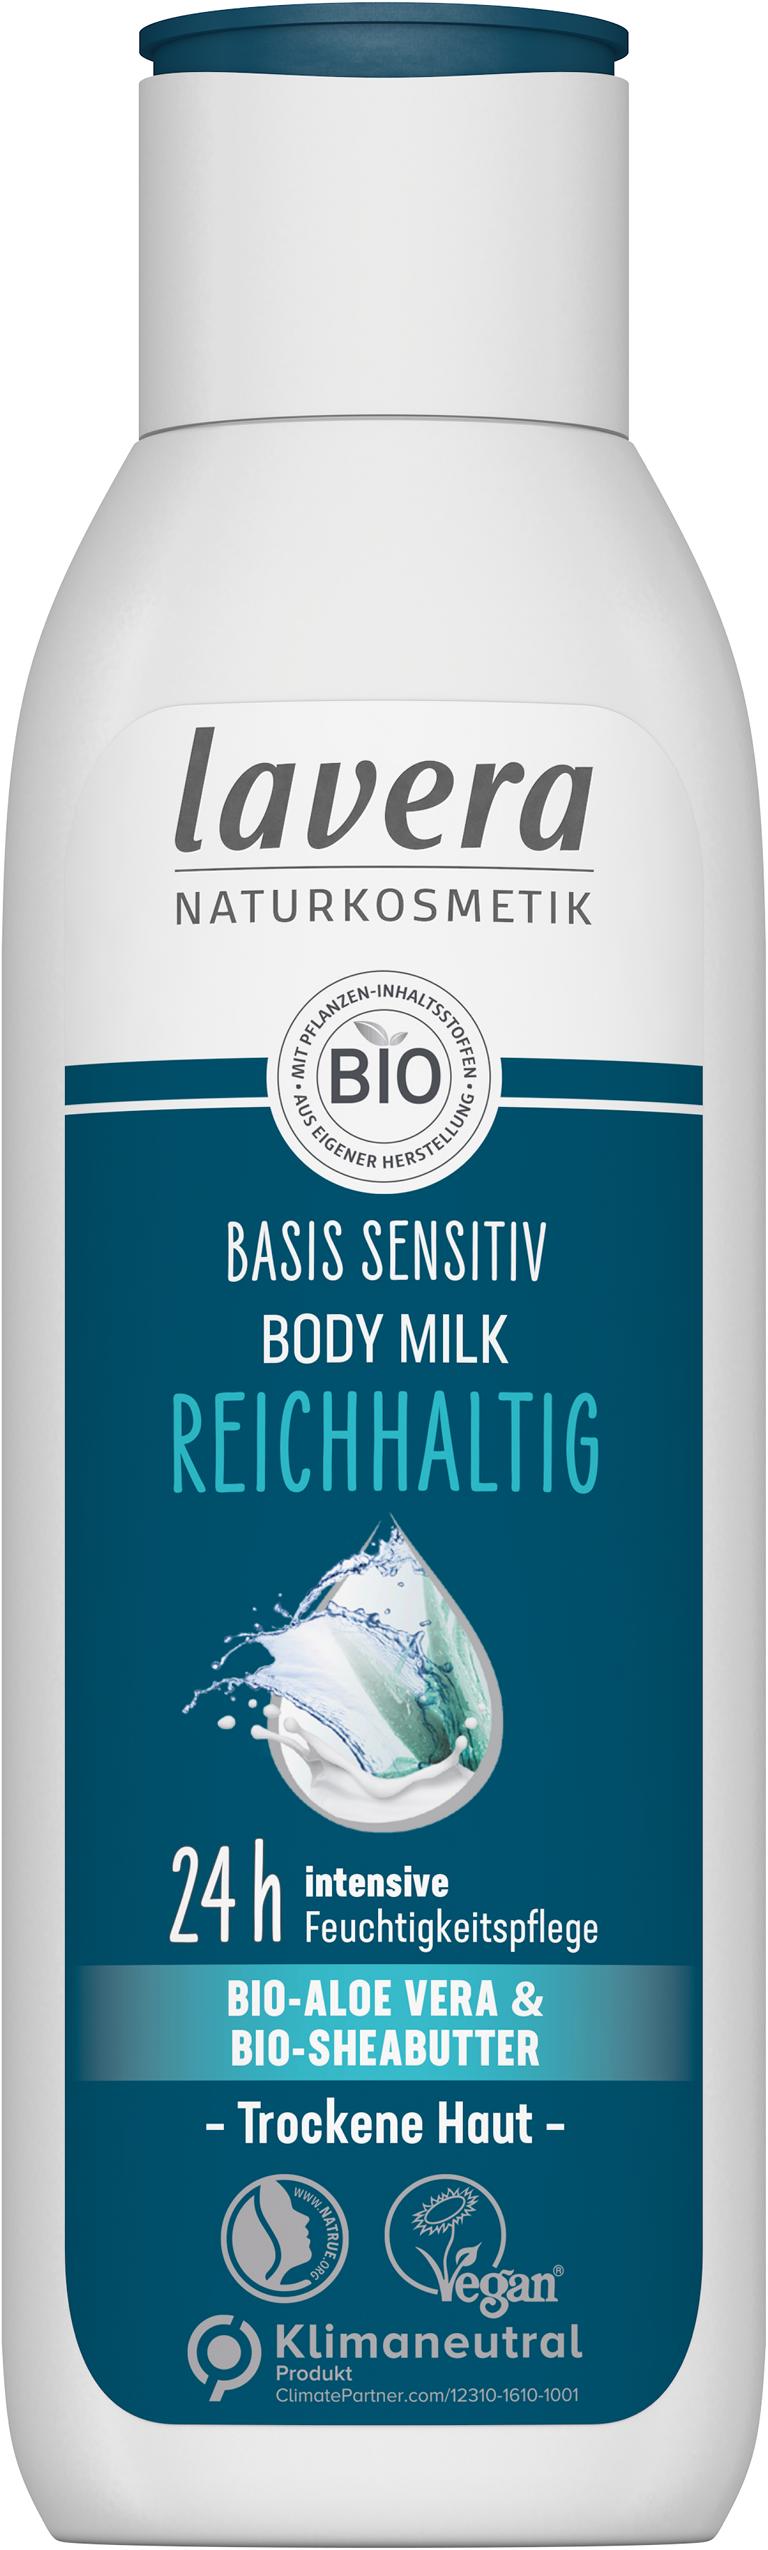 Lavera Basis Sensitiv Body Milk Reichhaltig 250ml